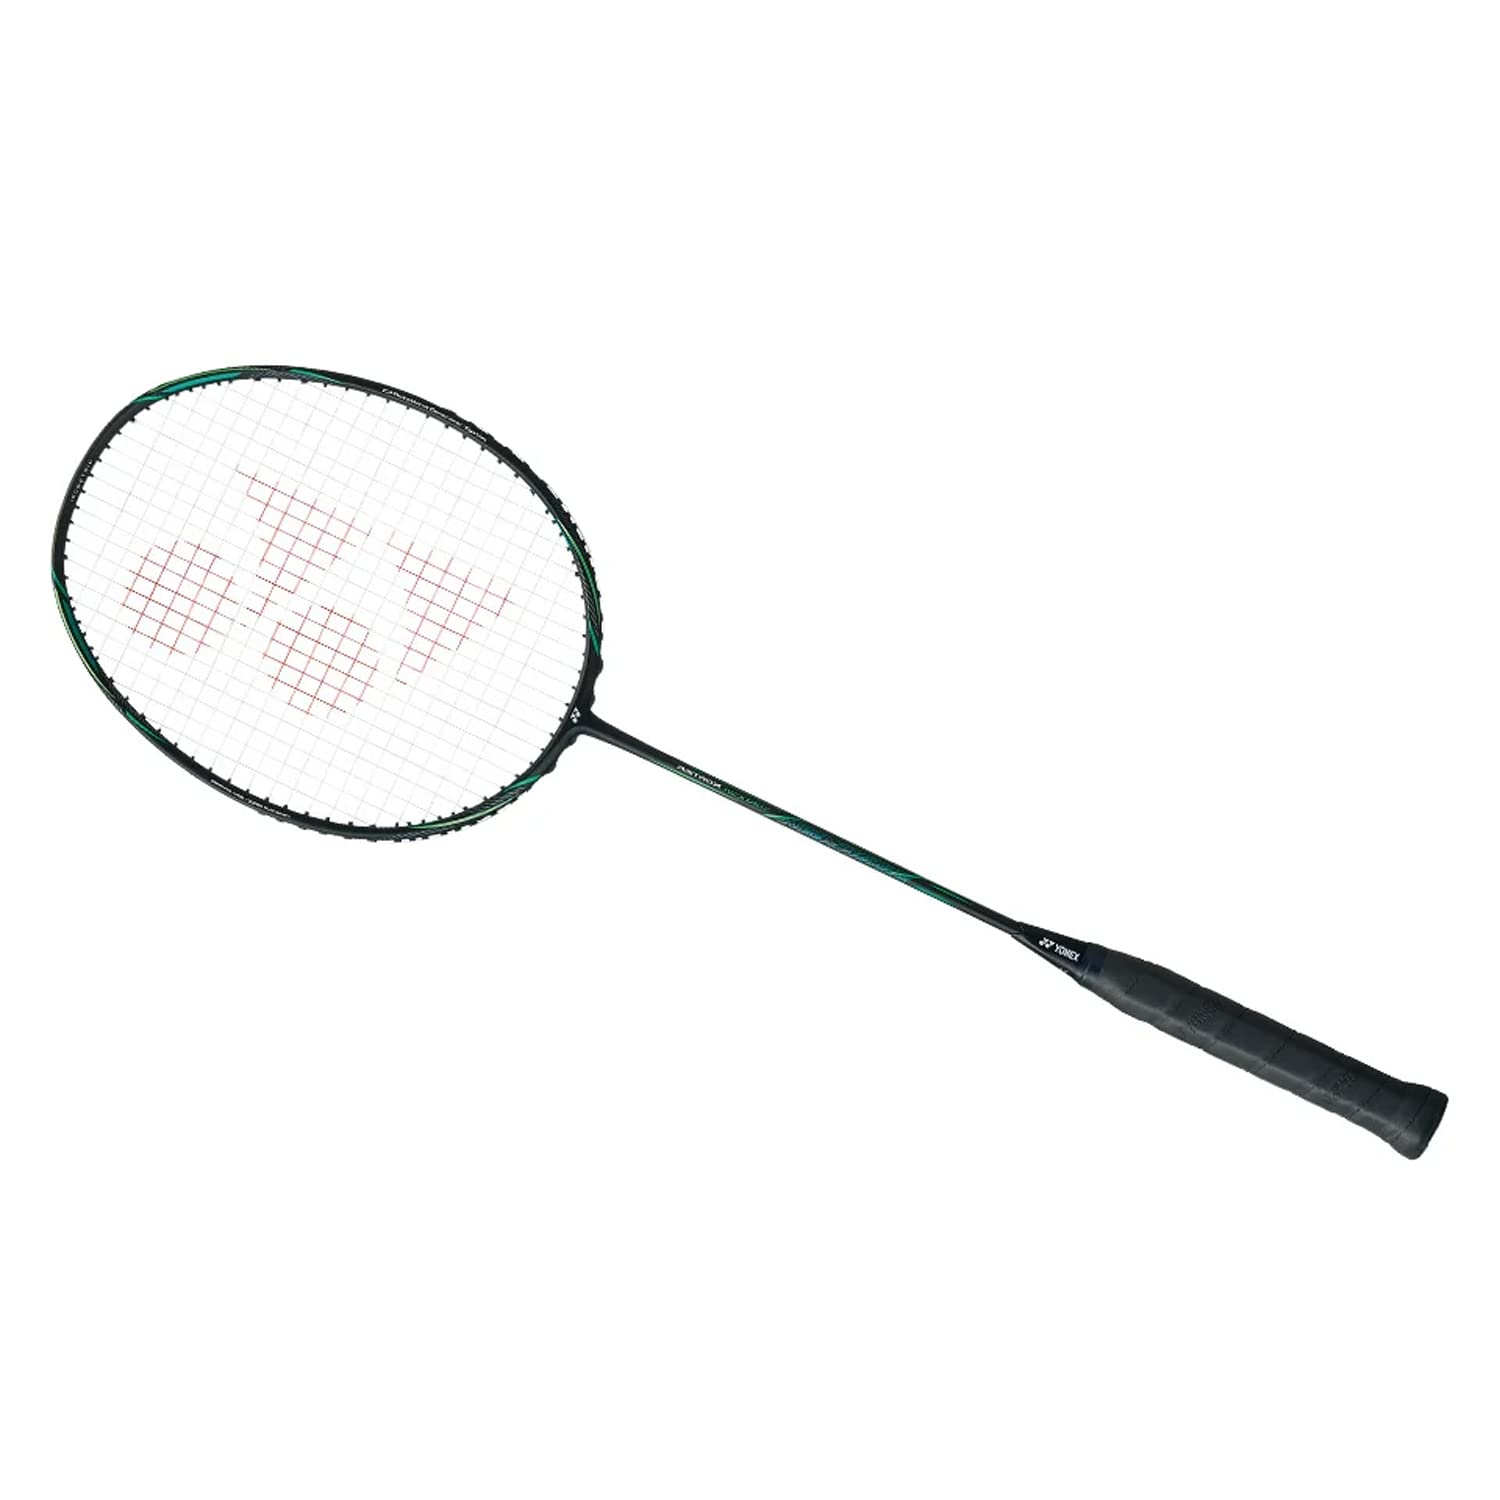 Yonex Astrox NextAge Badminton Racket